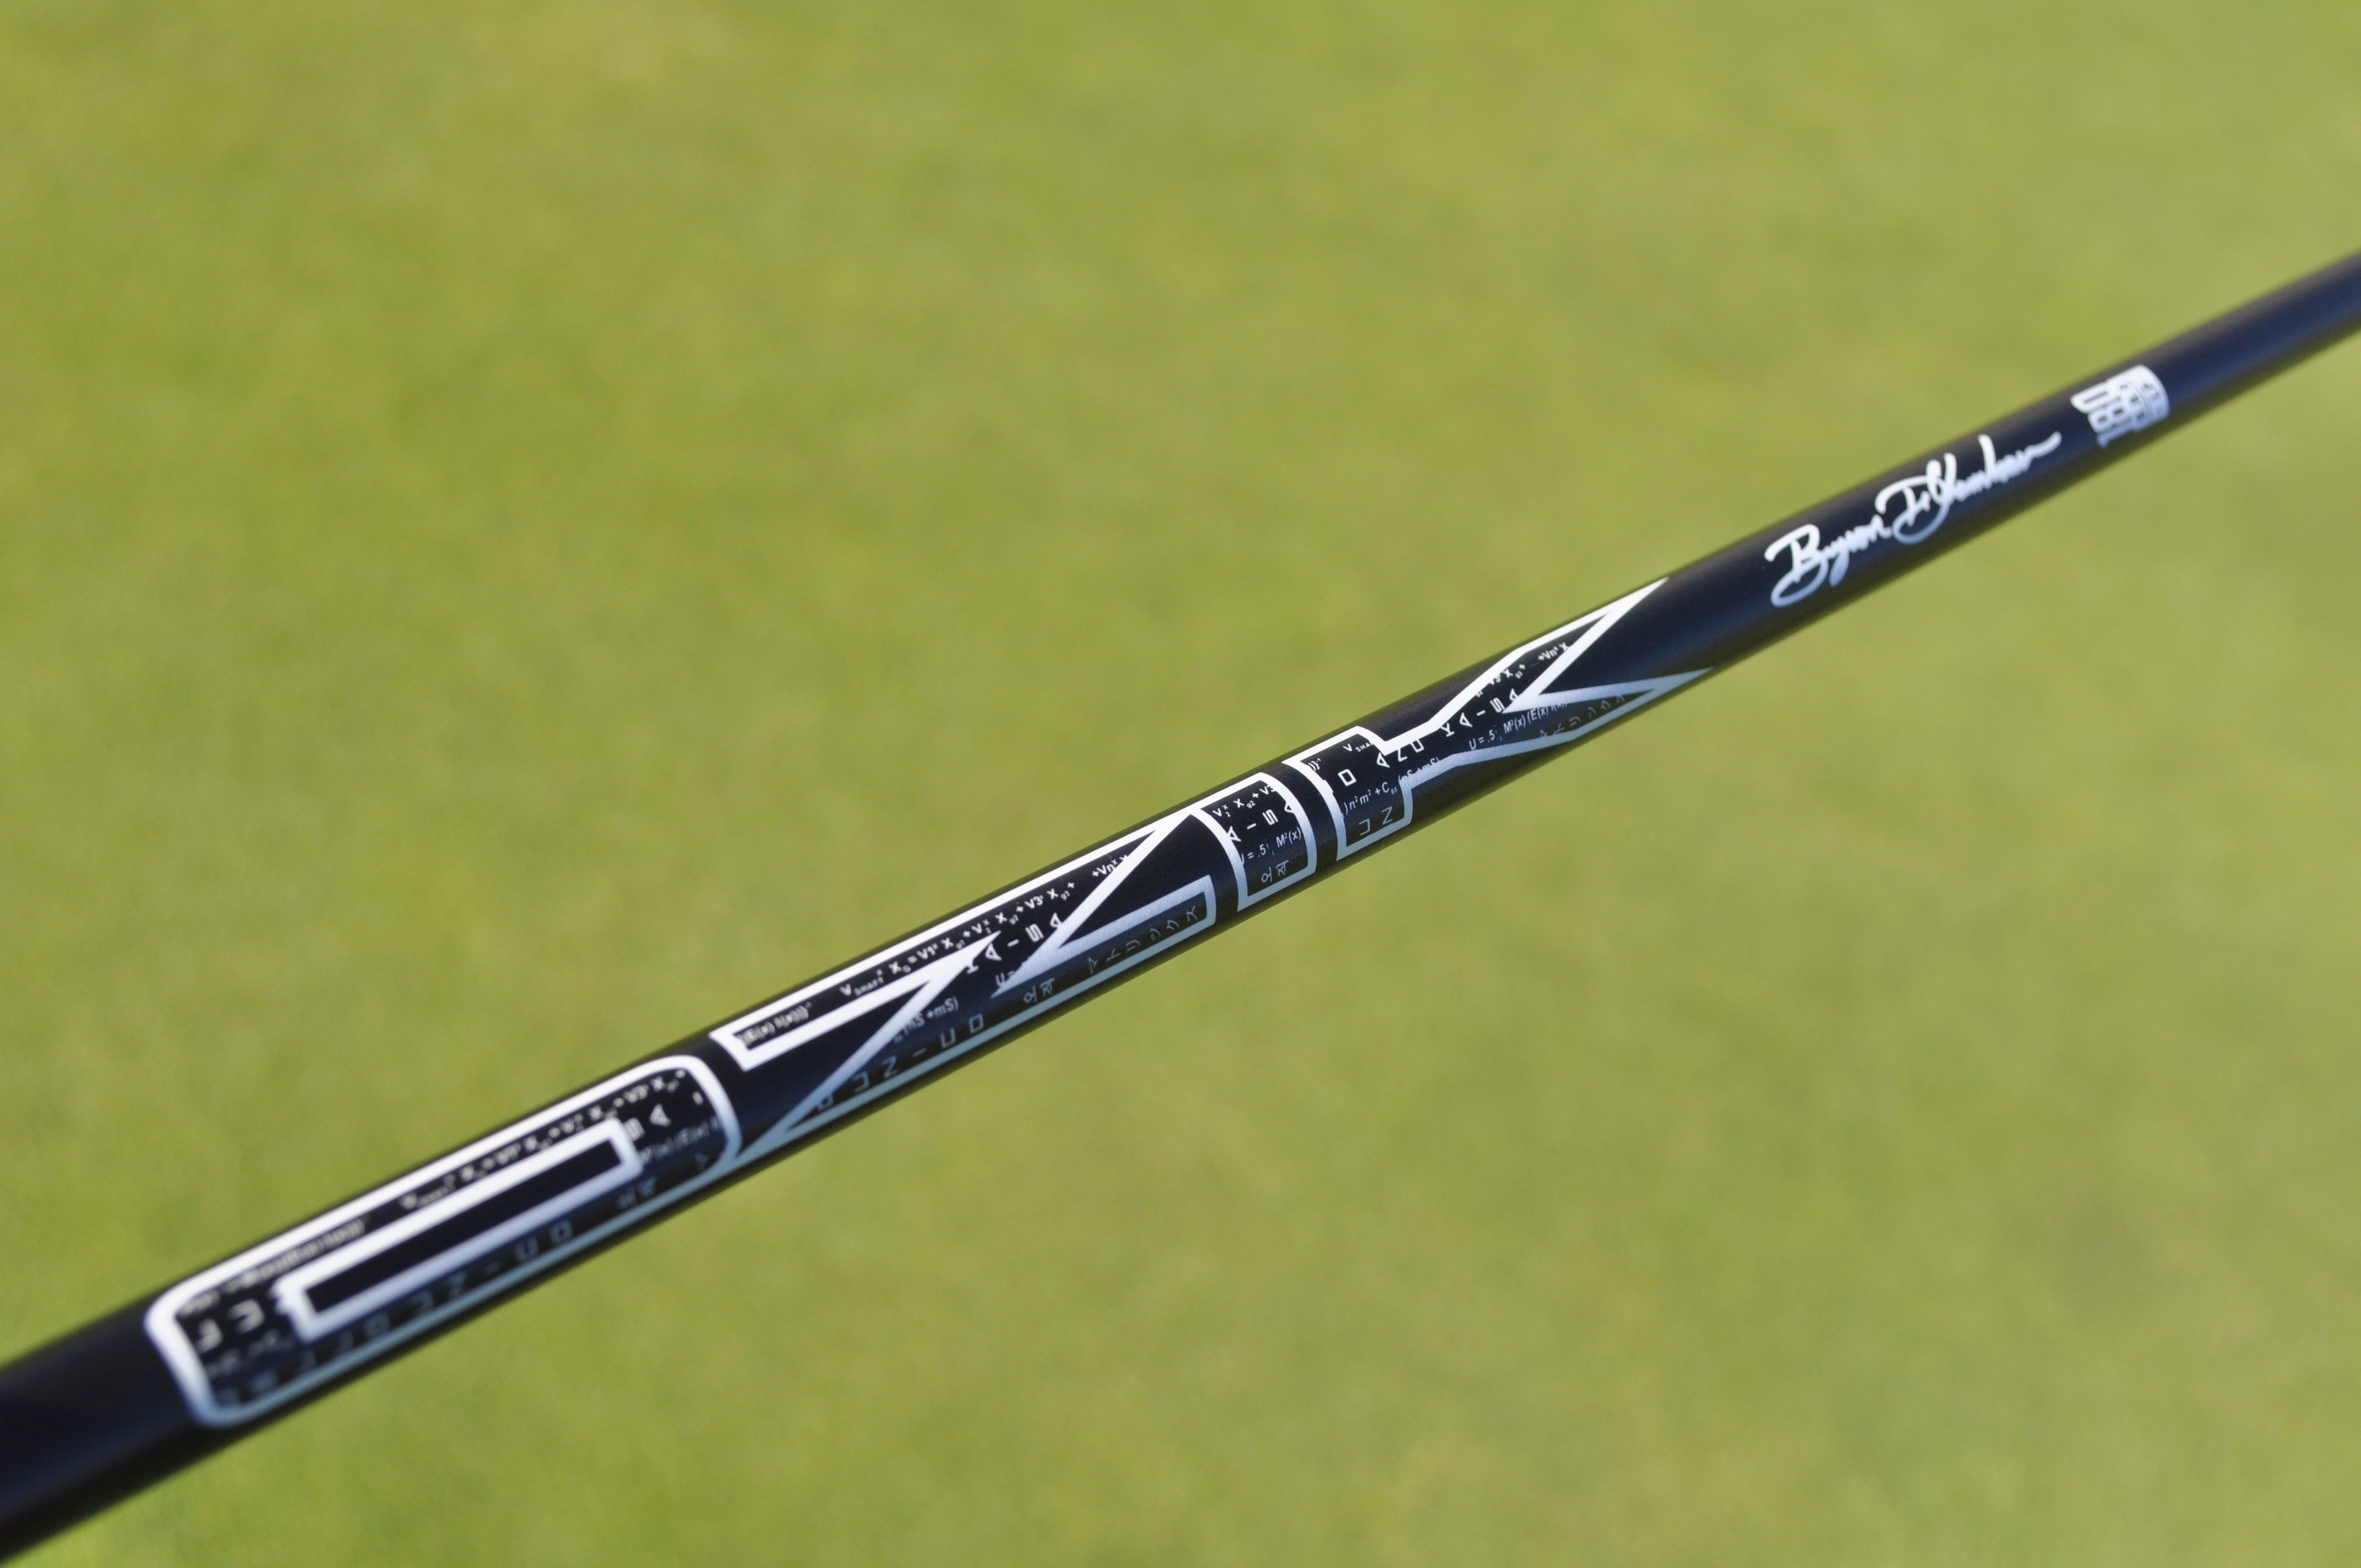 LA Golf created a Matrix signature putter shaft for Bryson DeChambeau.